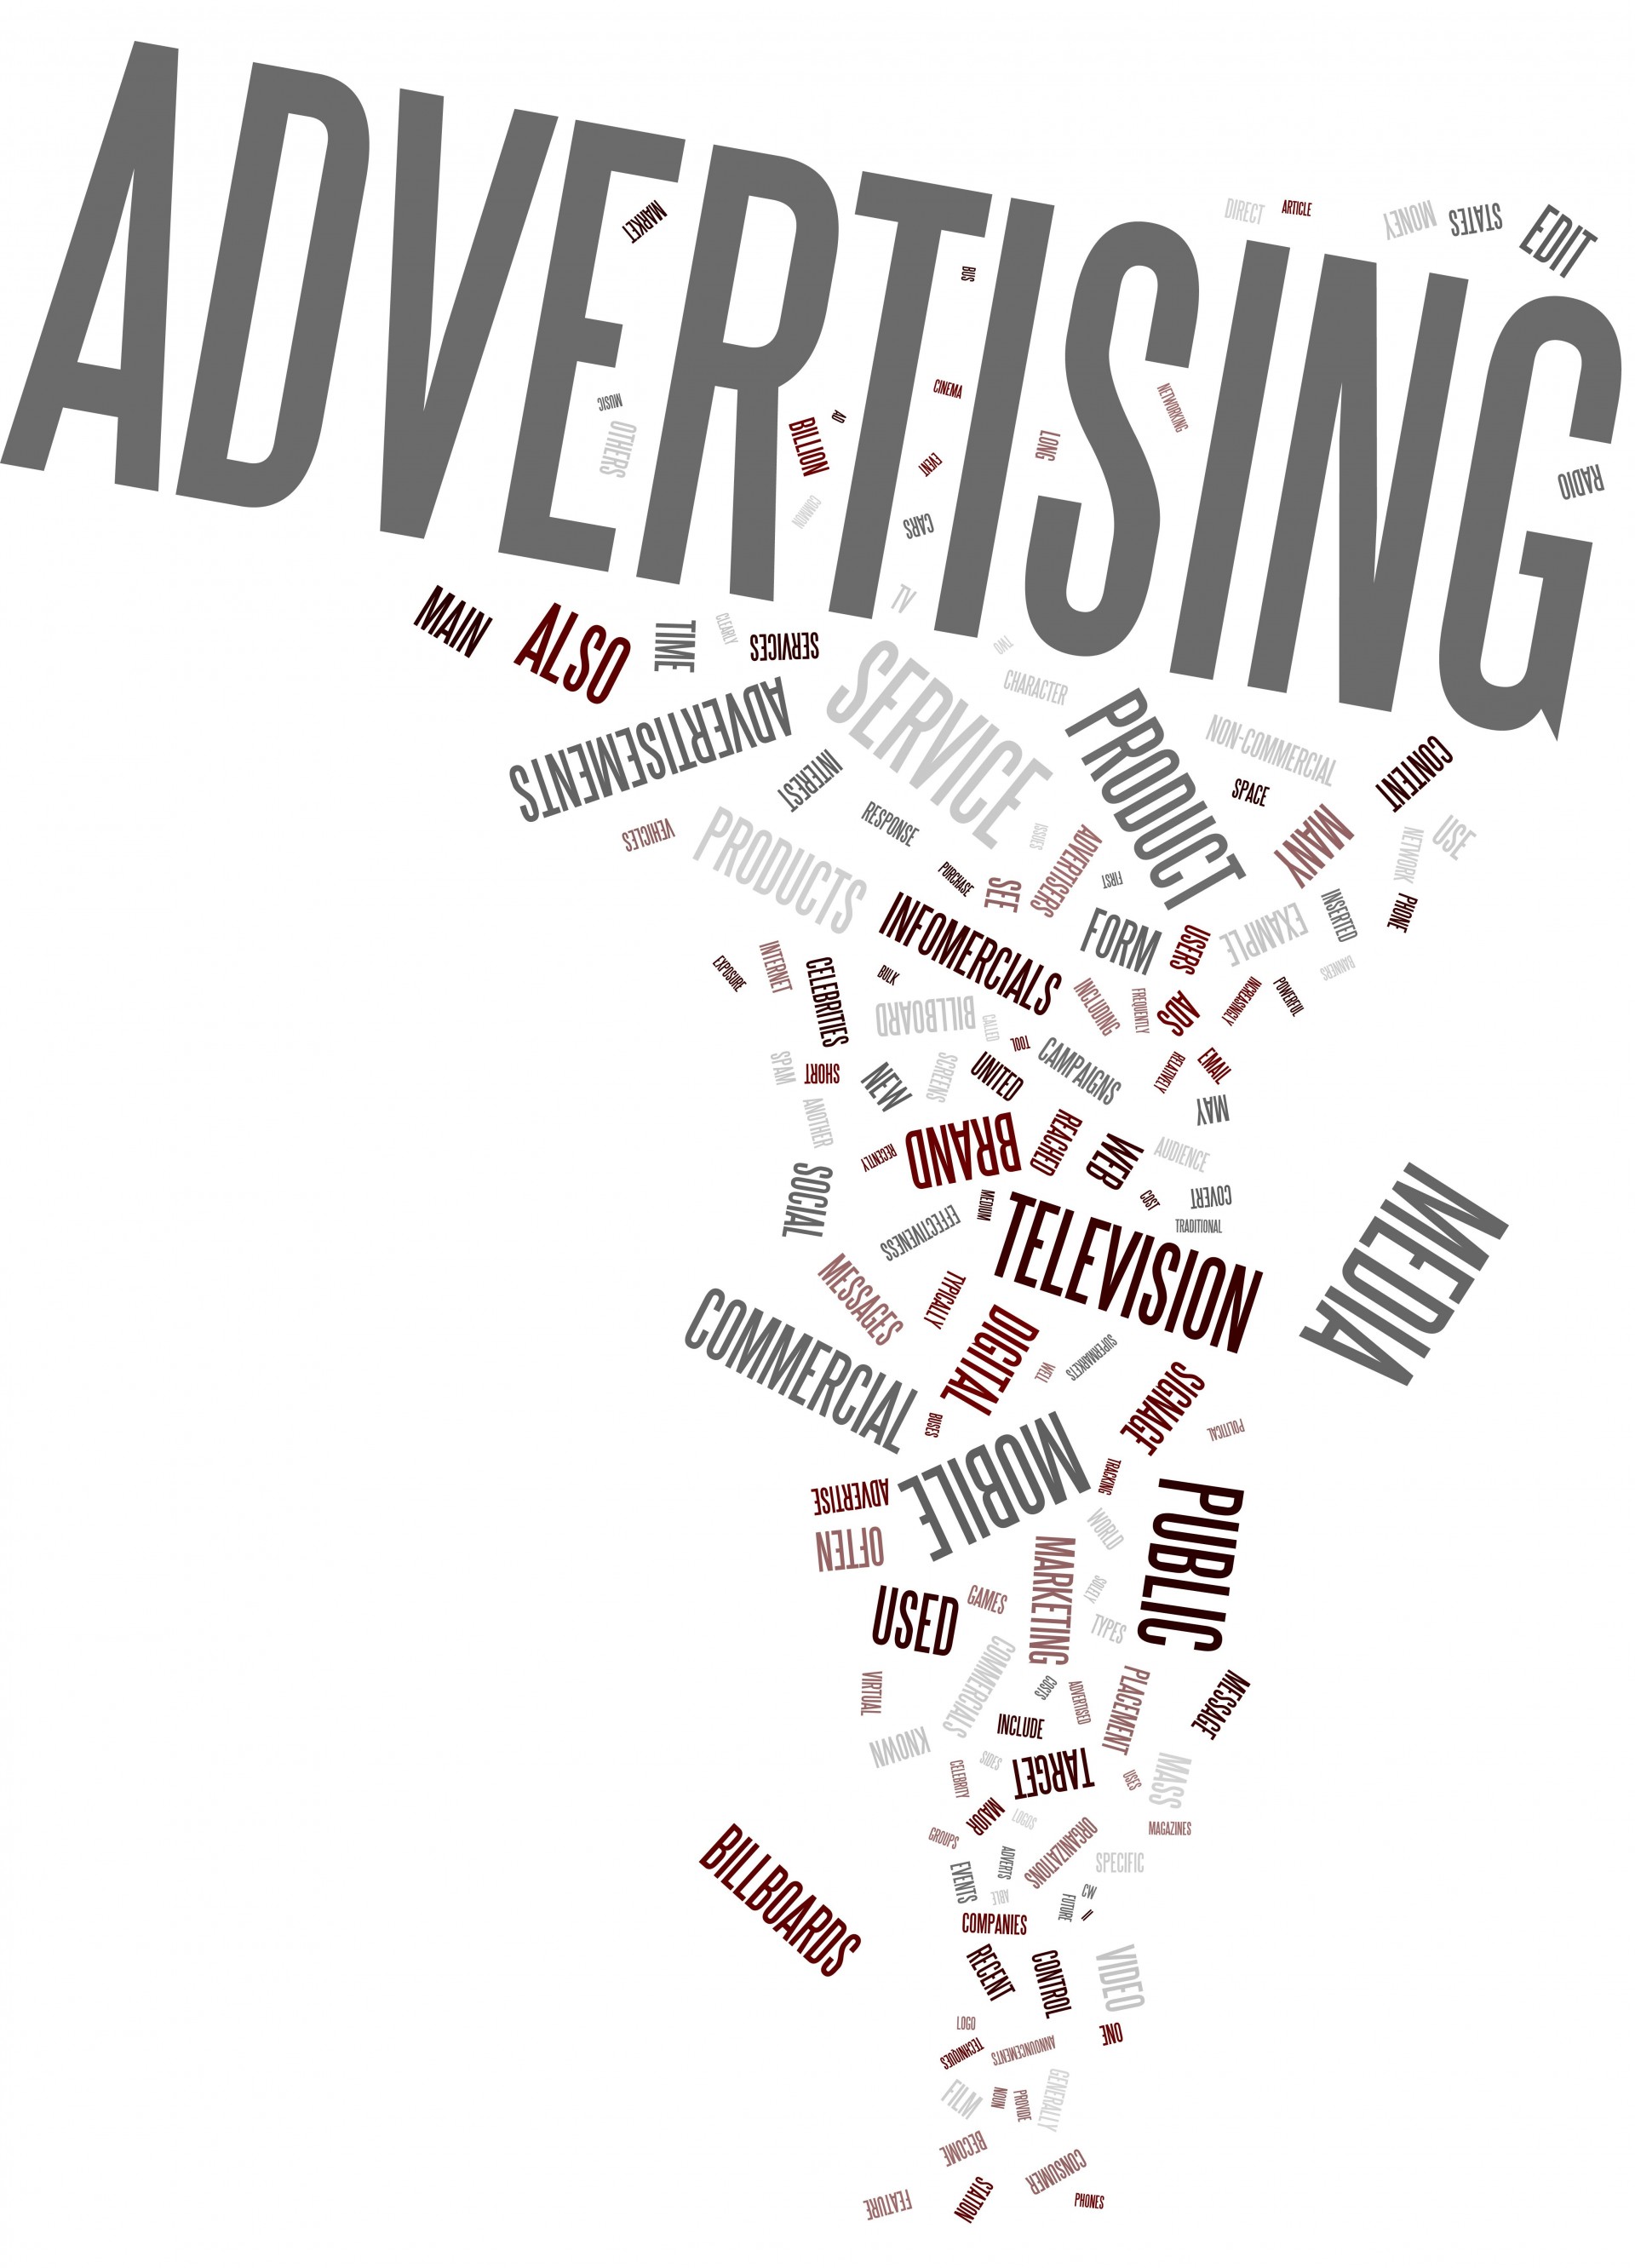 advertising-1.jpg